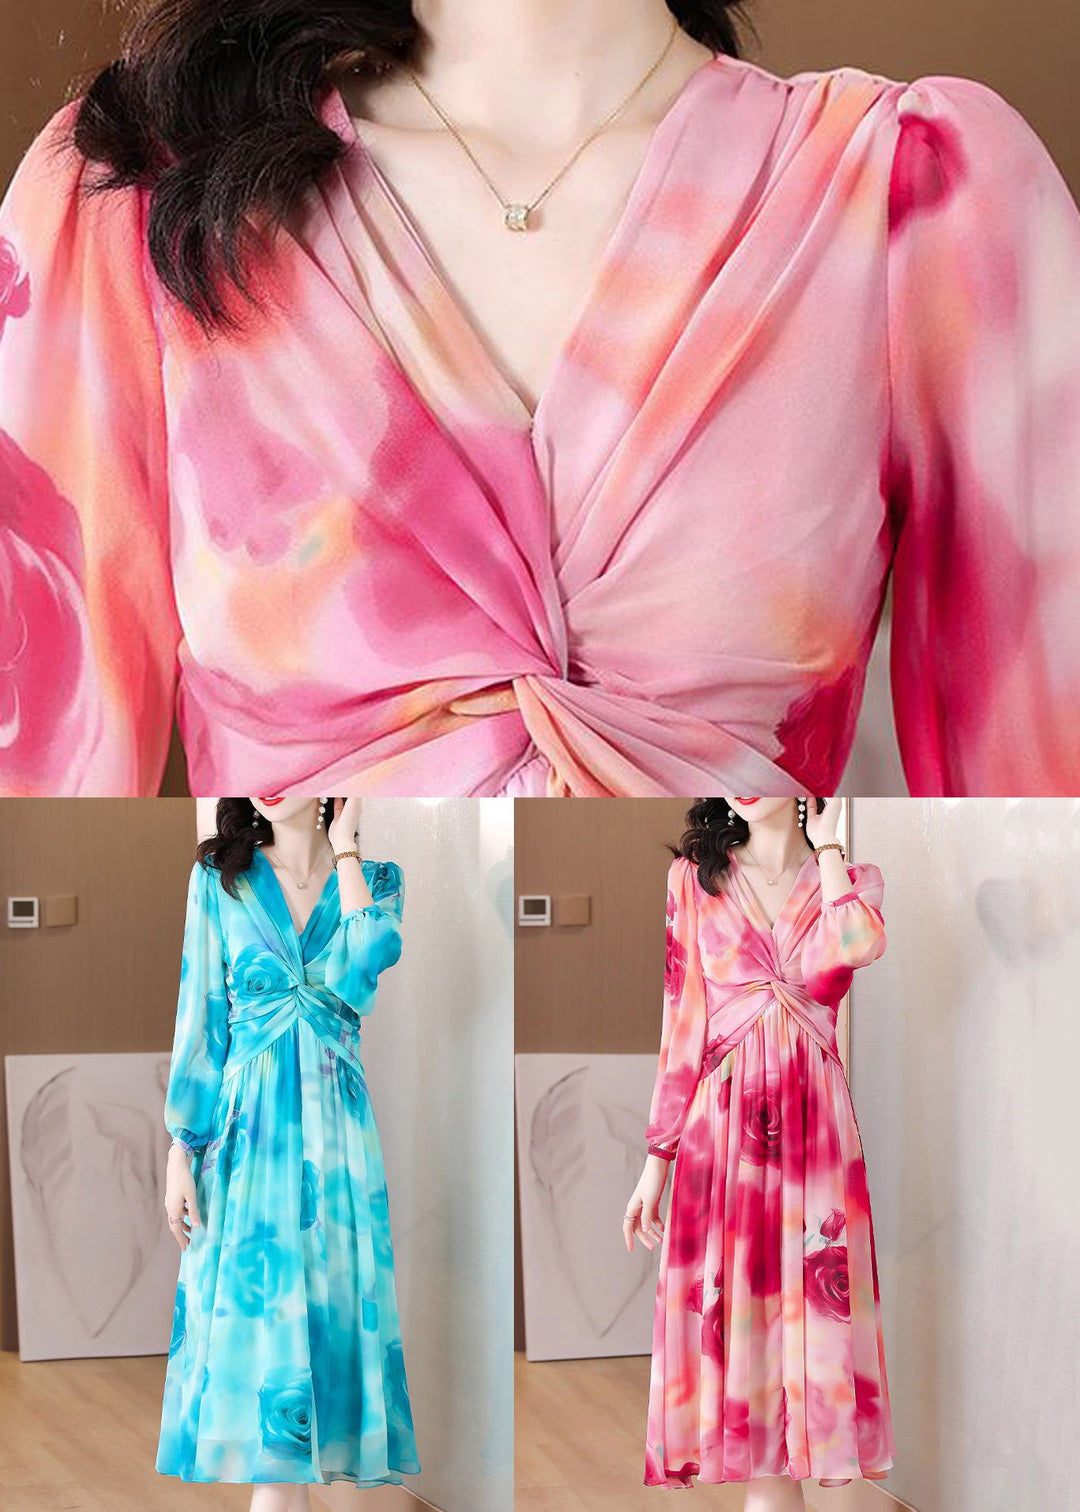 Unique Pink Print High Waist Chiffon Dress Spring